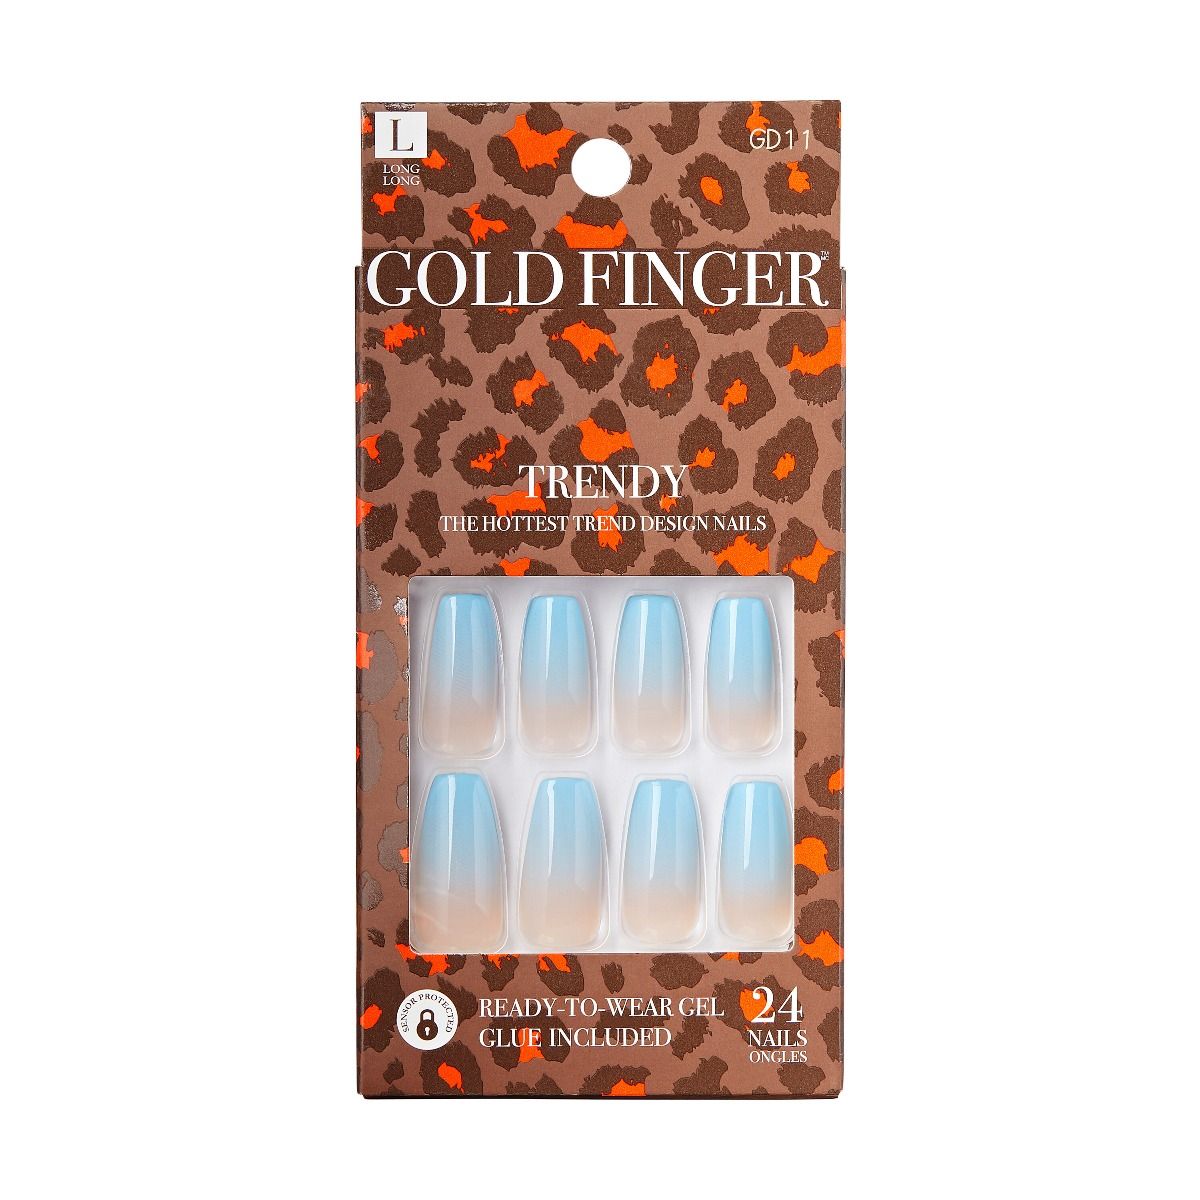 KISS Gold Finger Trendy 24 Nails #GD11(DC)